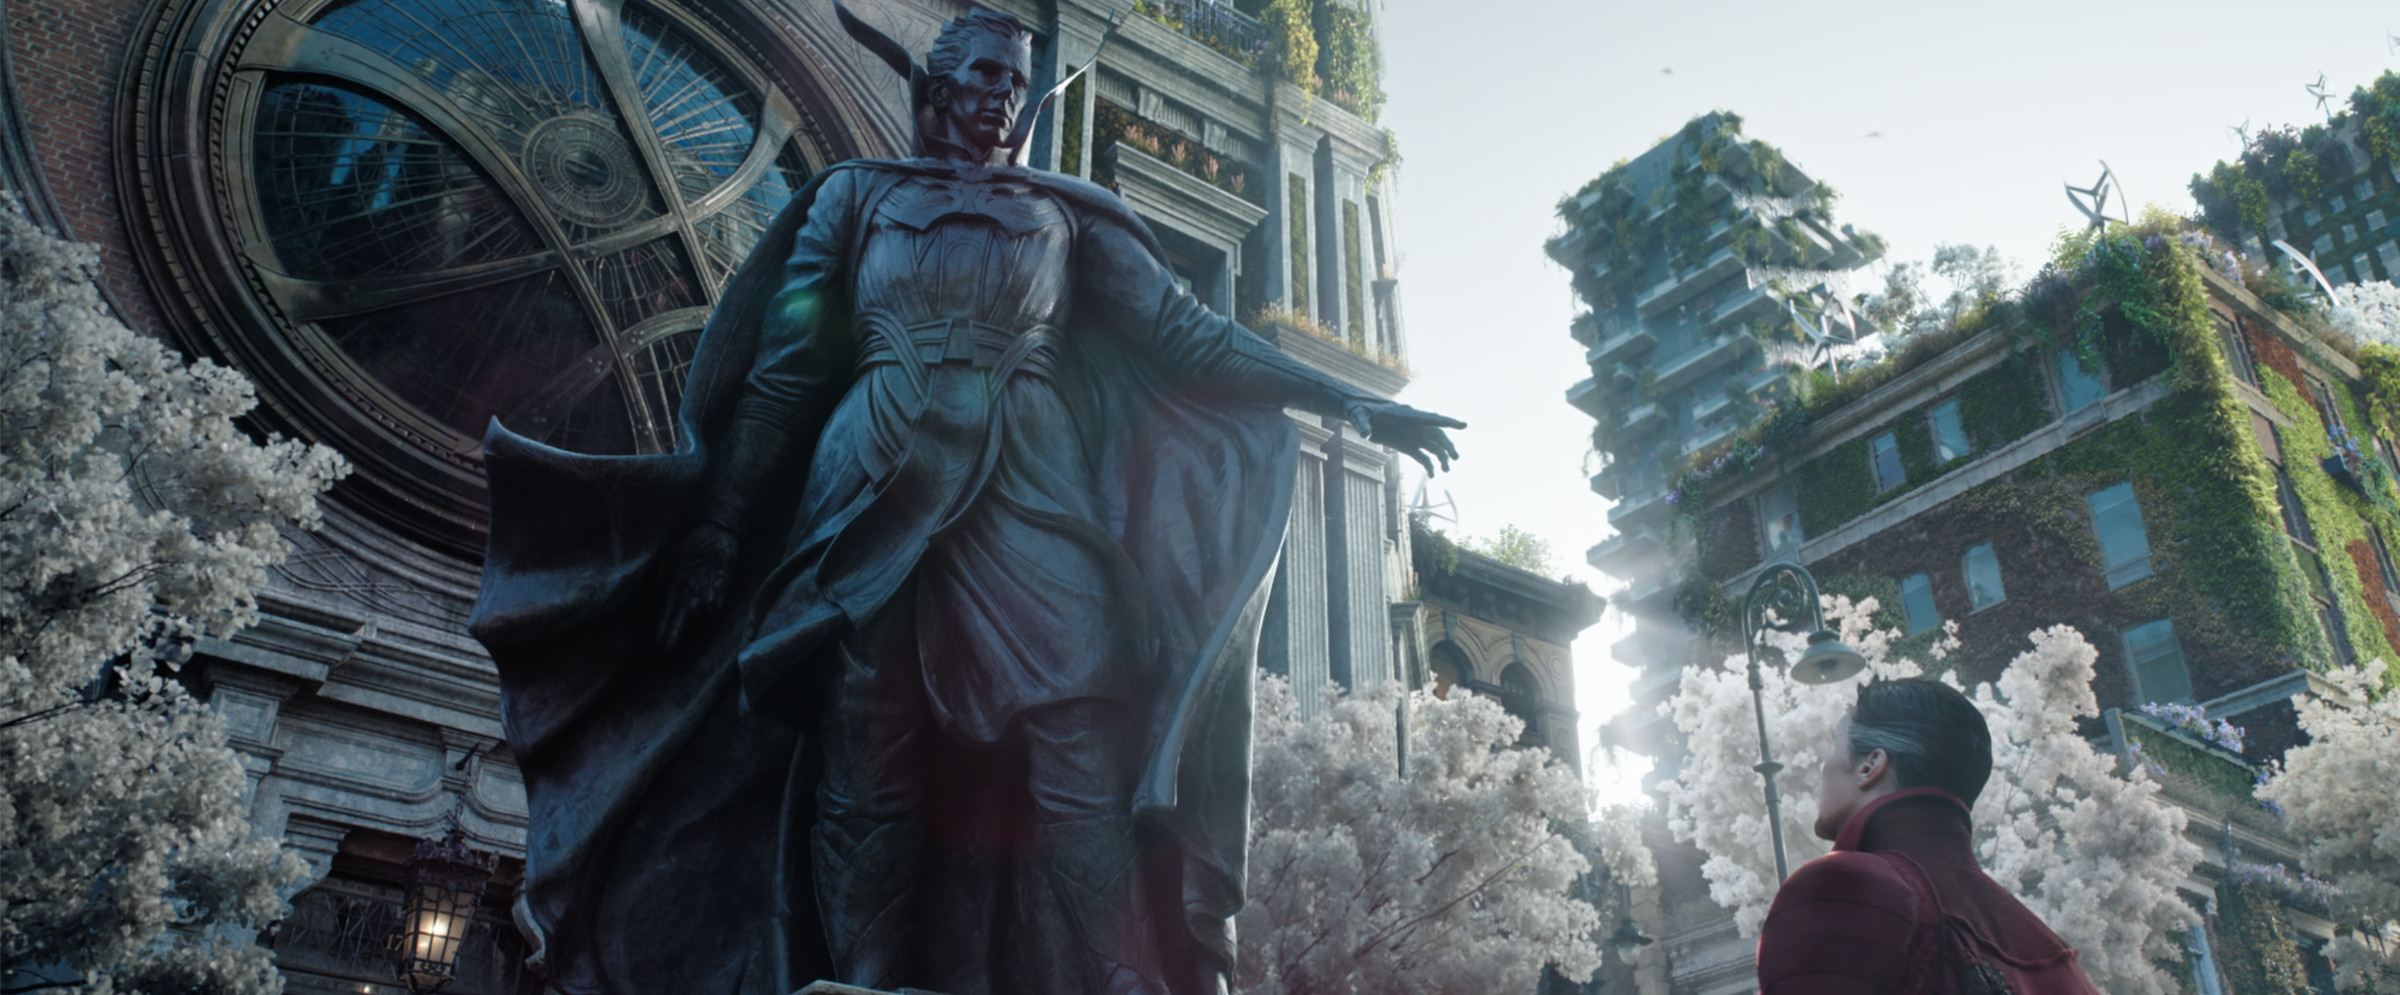 Doctor Strange gazing at a statue of himself.